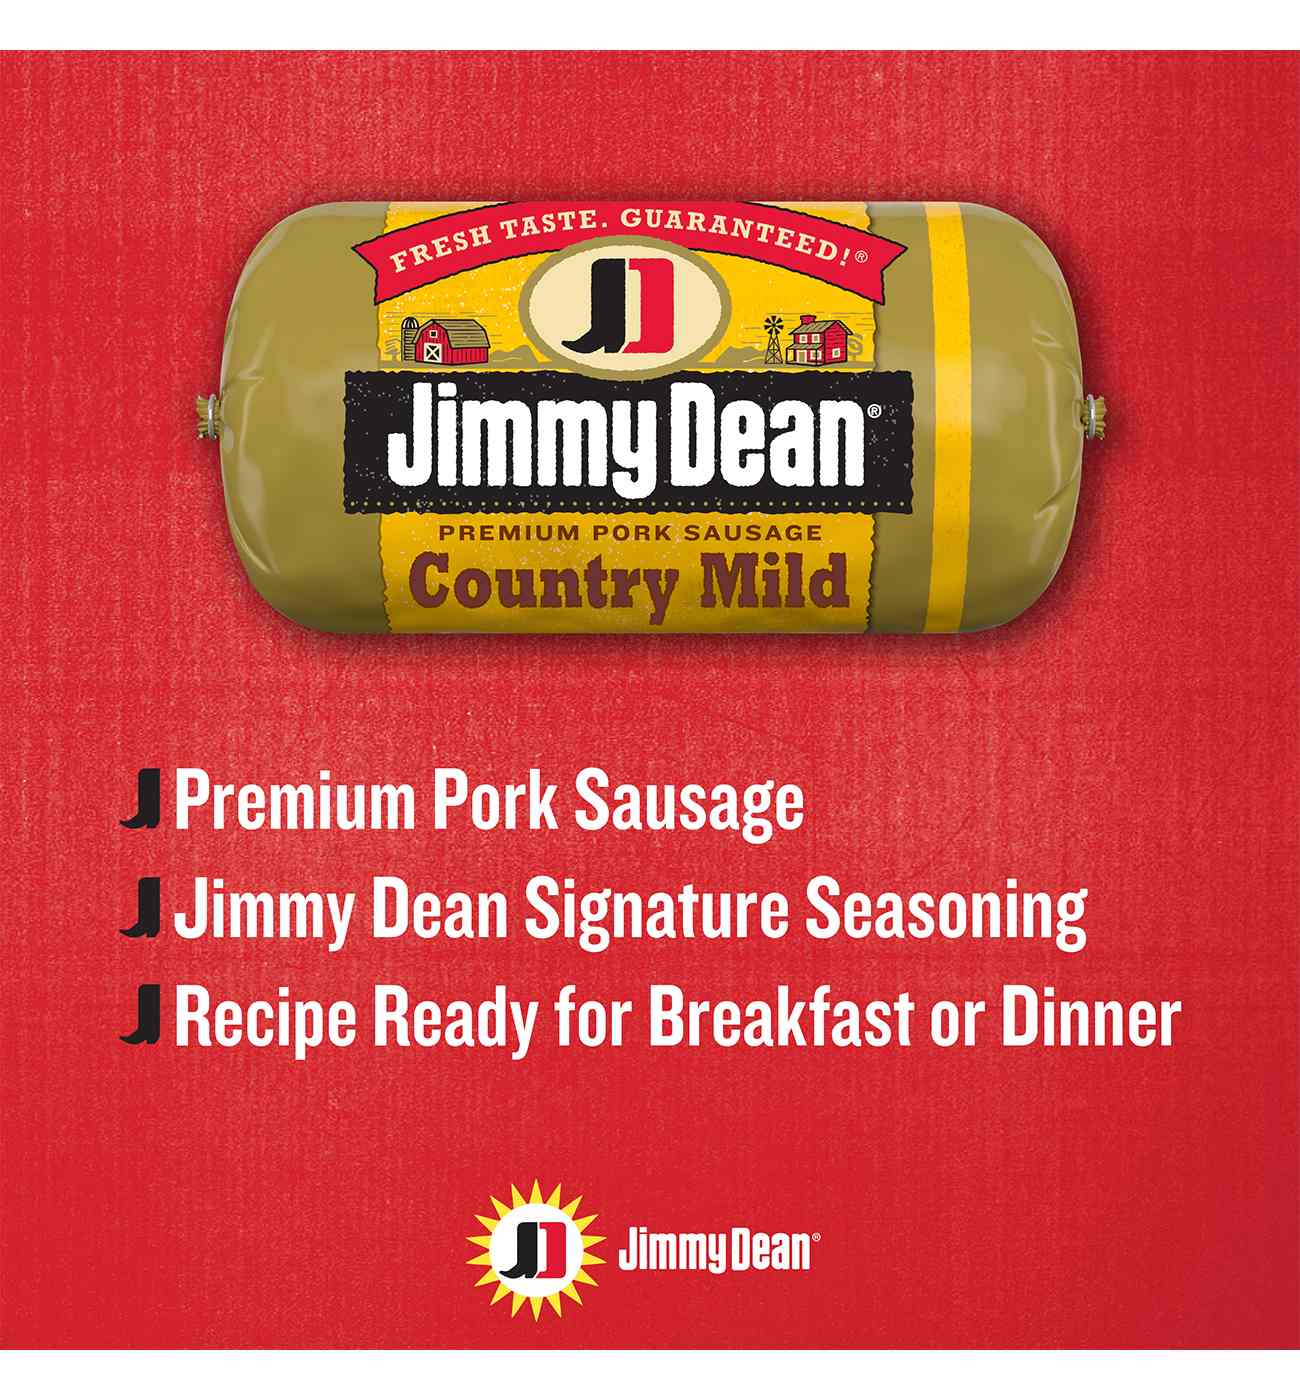 Jimmy Dean Premium Pork Breakfast Sausage - Country Mild; image 4 of 5